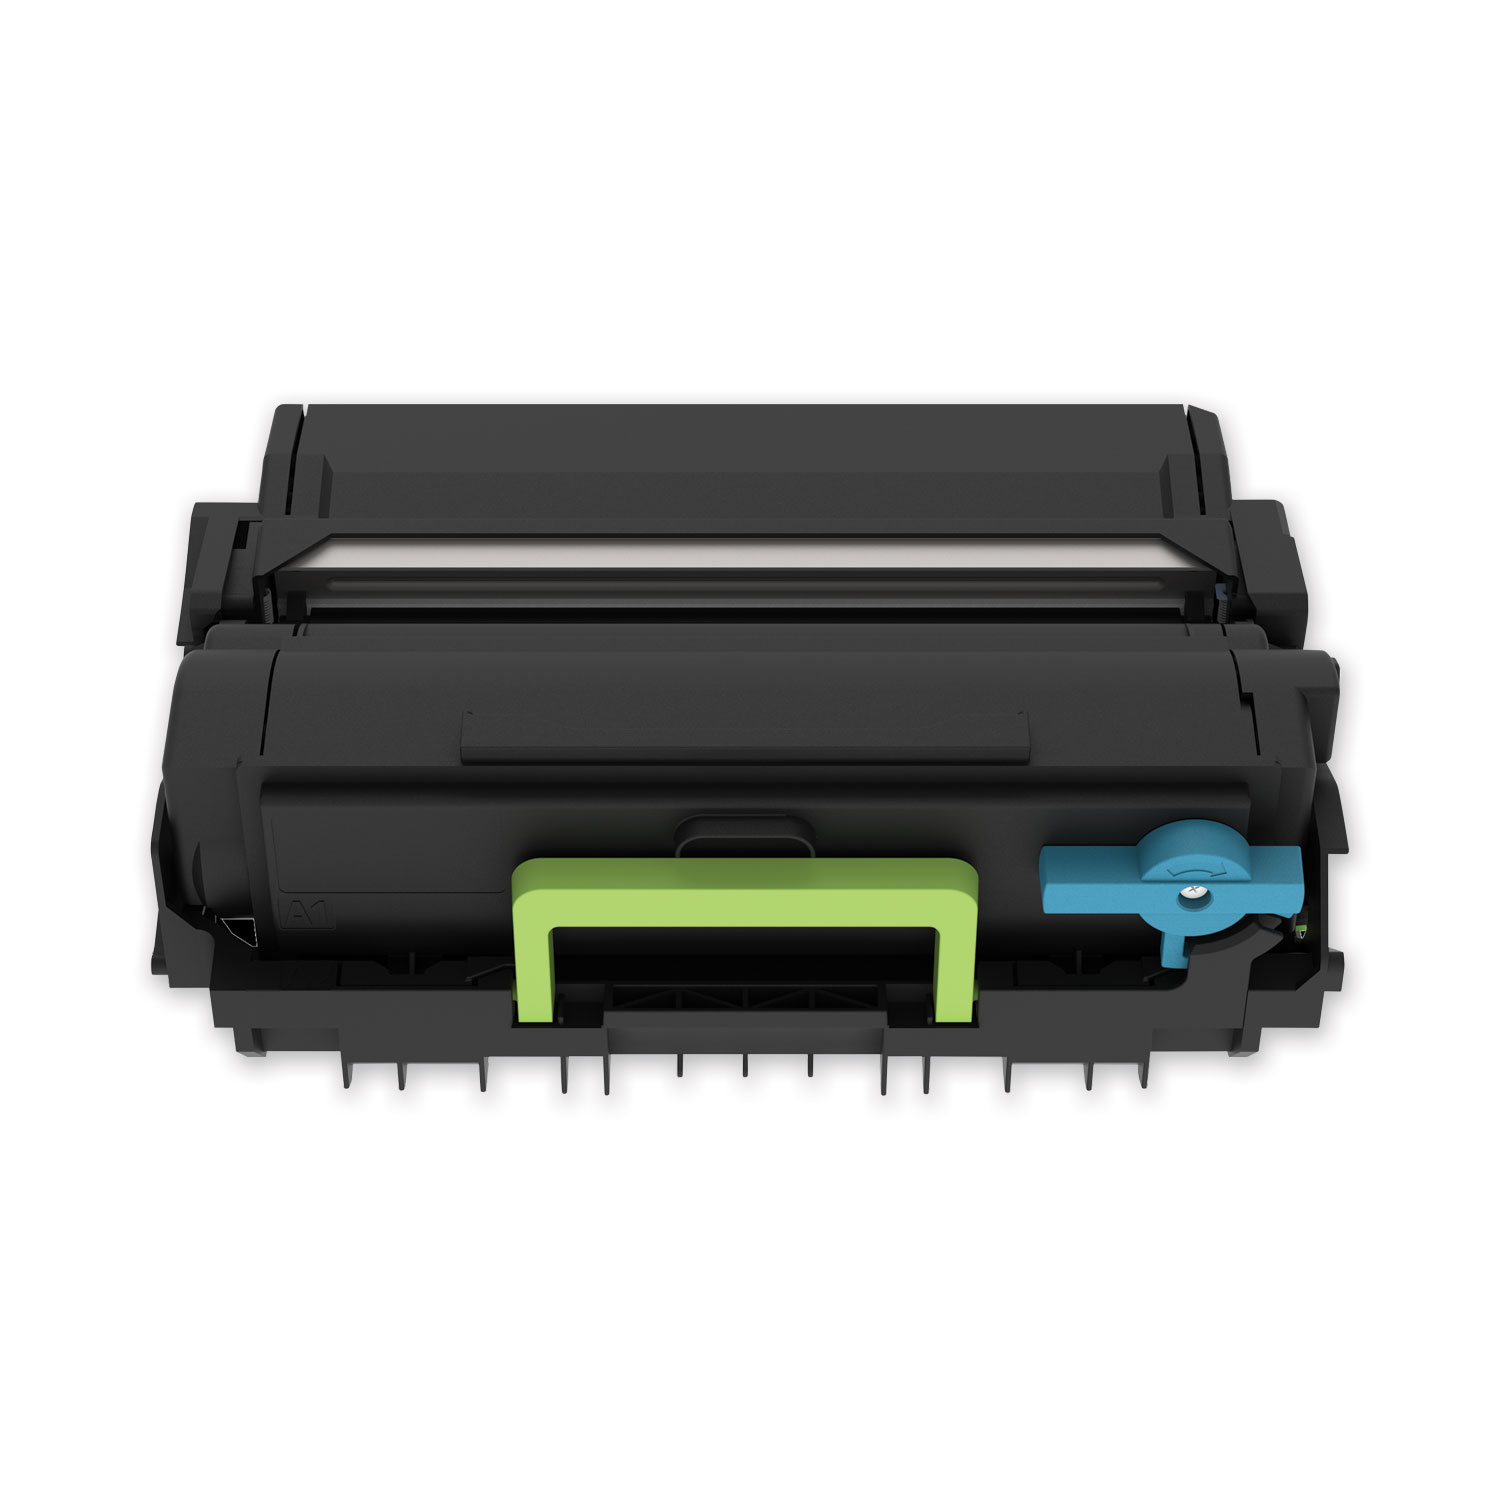  Lexmark B341000 B341000 Return Program Toner Cartridge, 1,500 Page-Yield, Black (LEXB341000) 